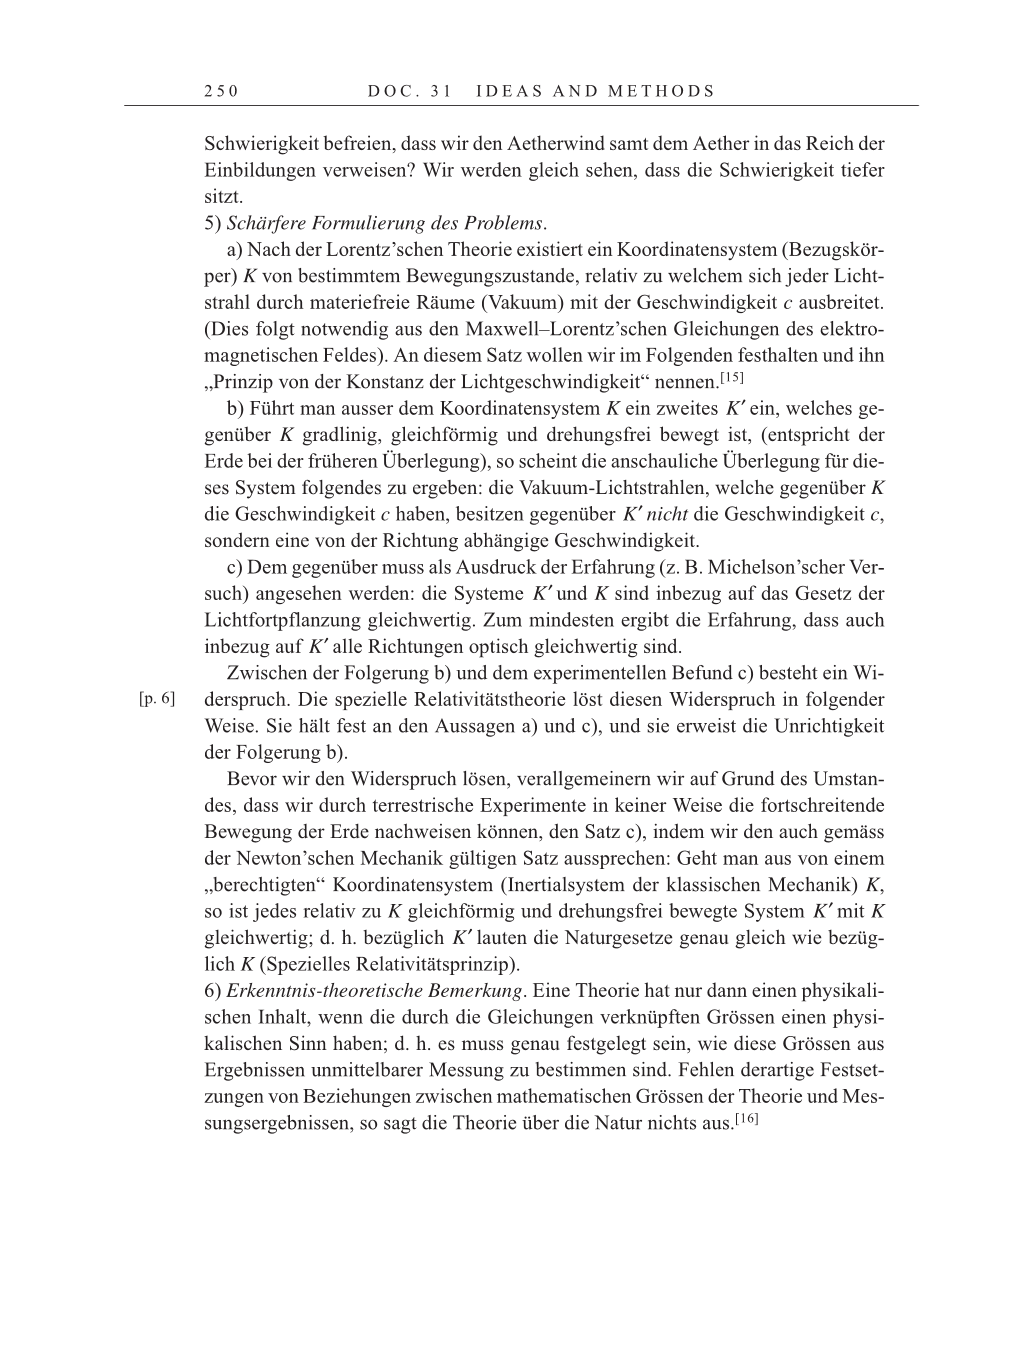 Volume 7: The Berlin Years: Writings, 1918-1921 page 250